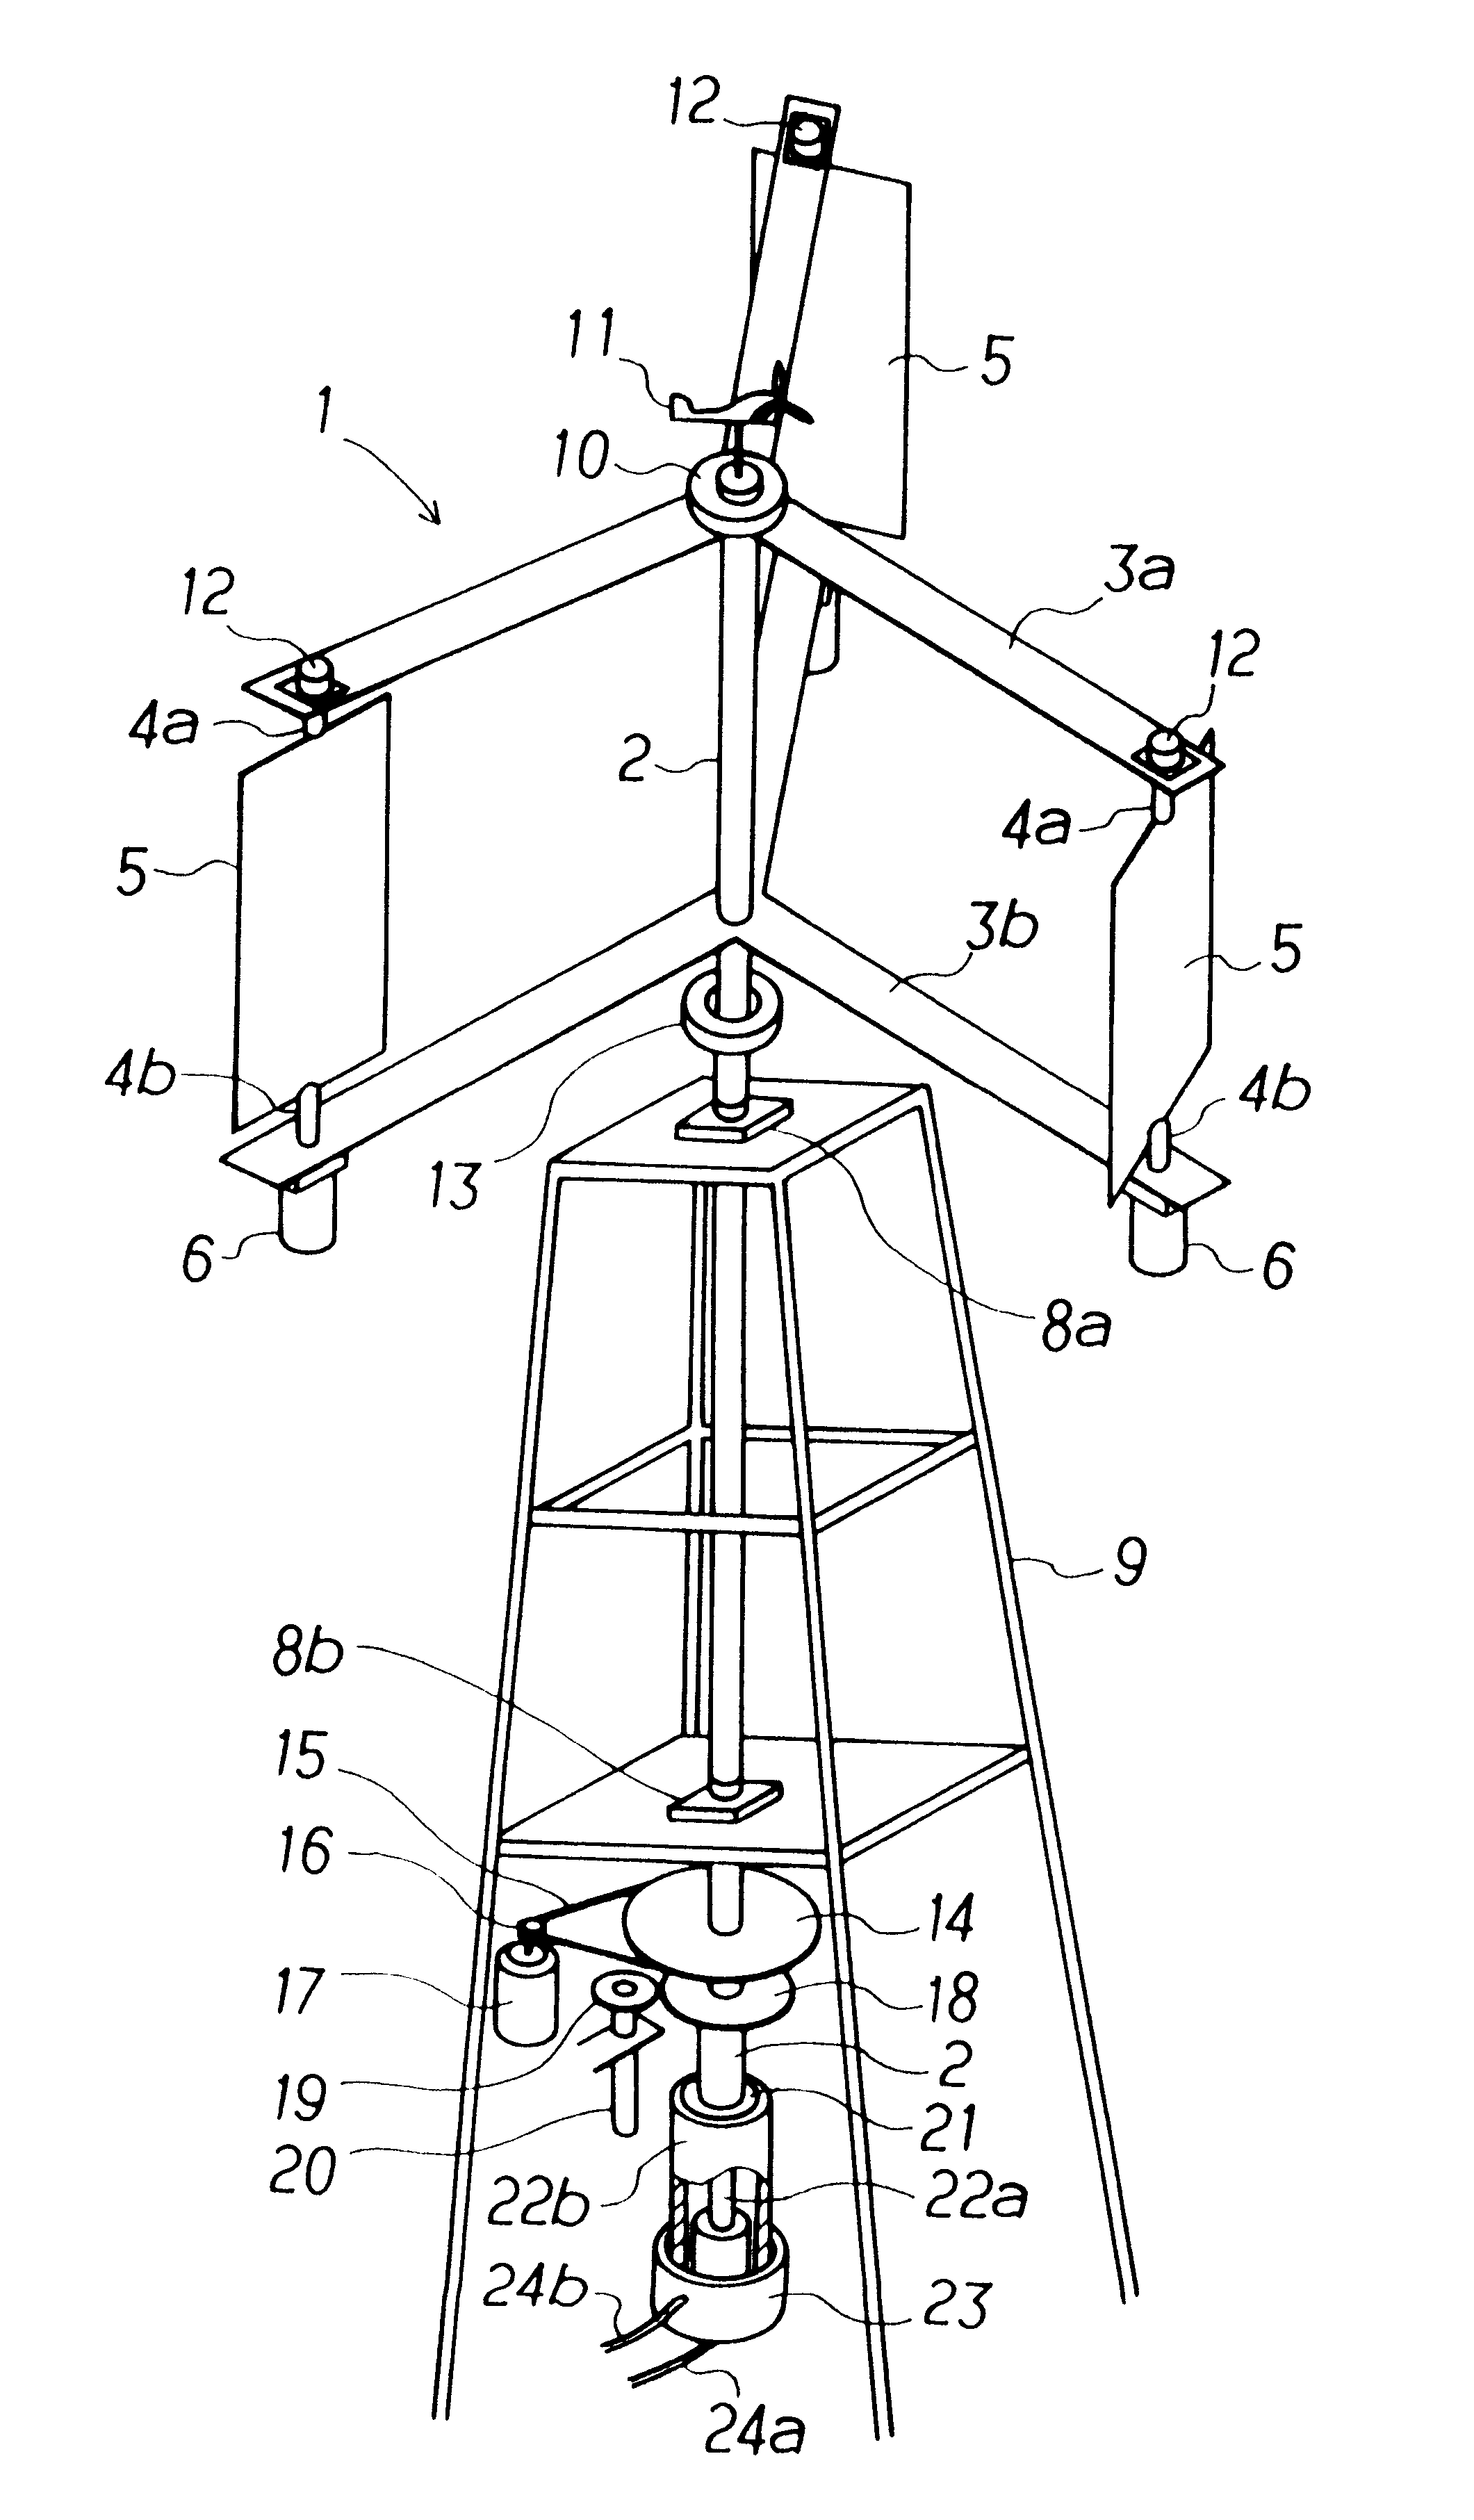 Windmill and windmill control method